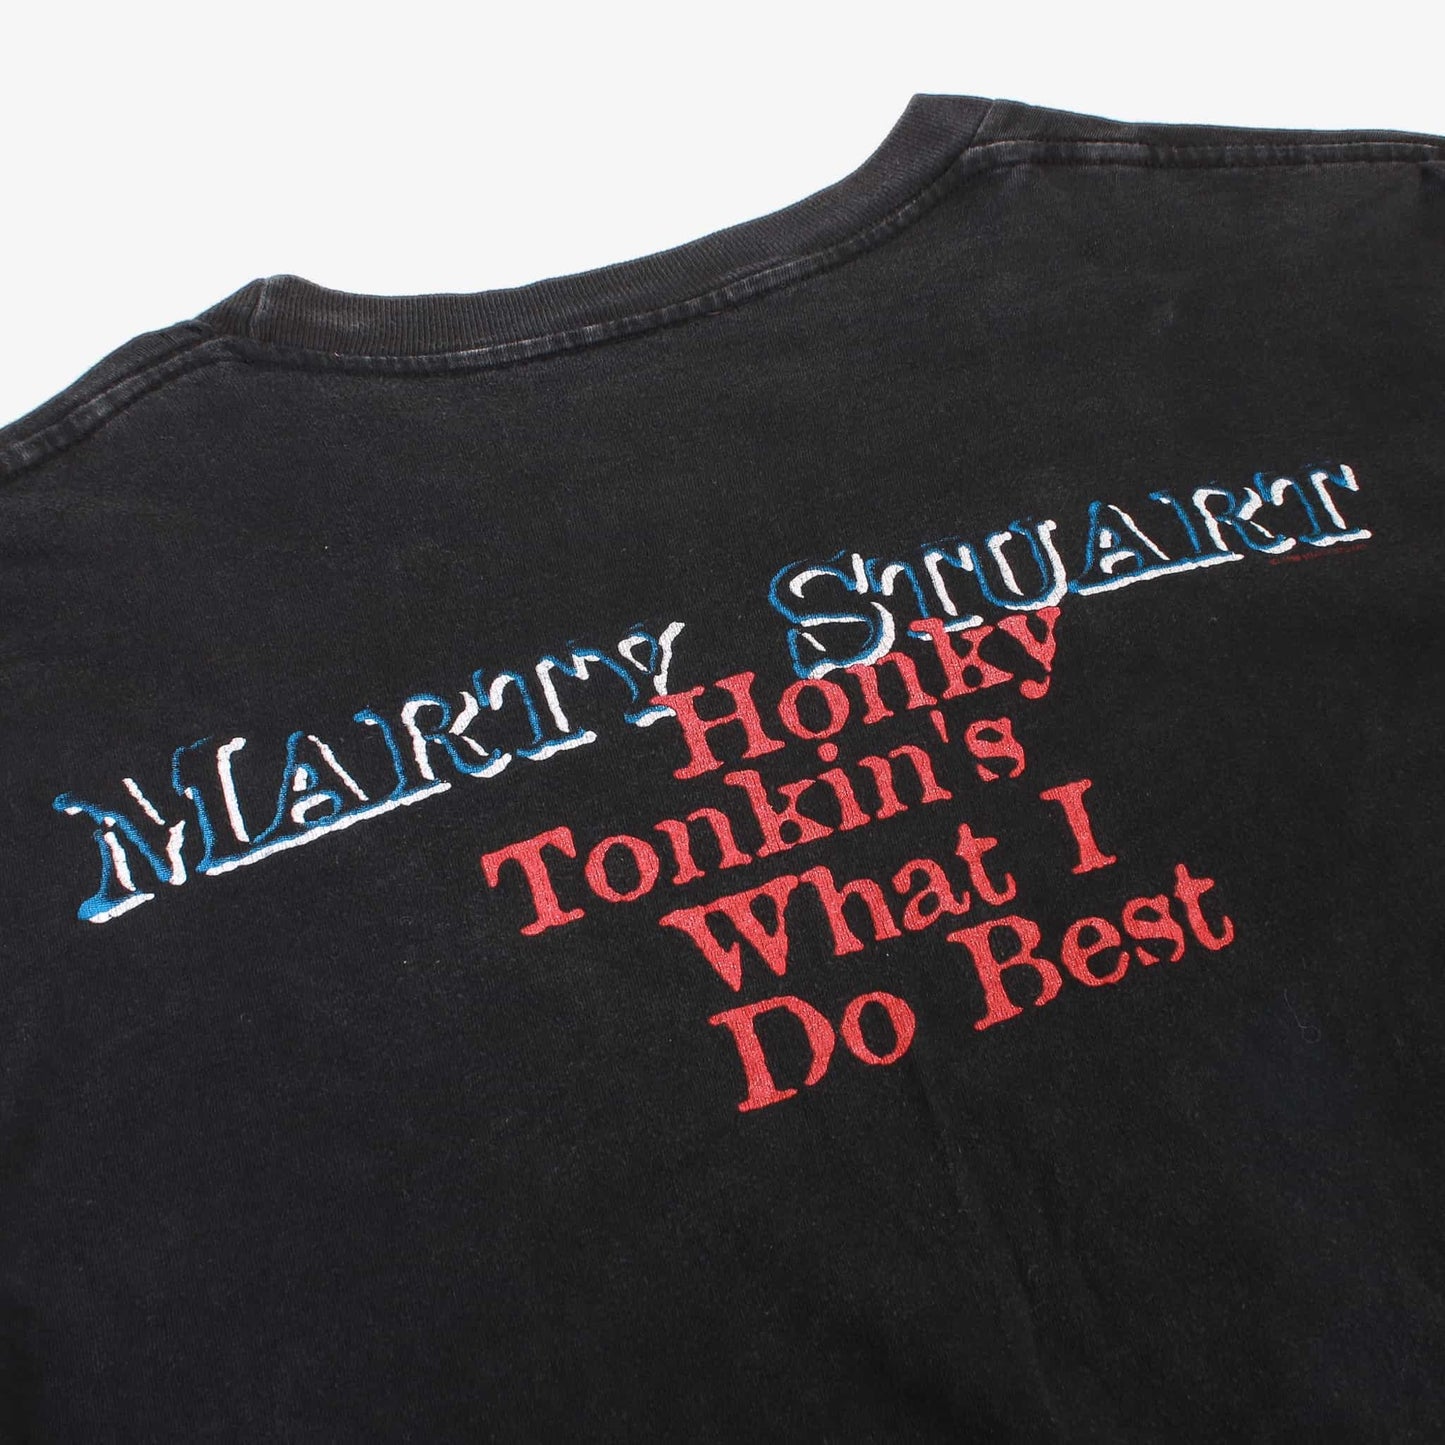 Vintage 'Marty Stuart' T-Shirt - American Madness